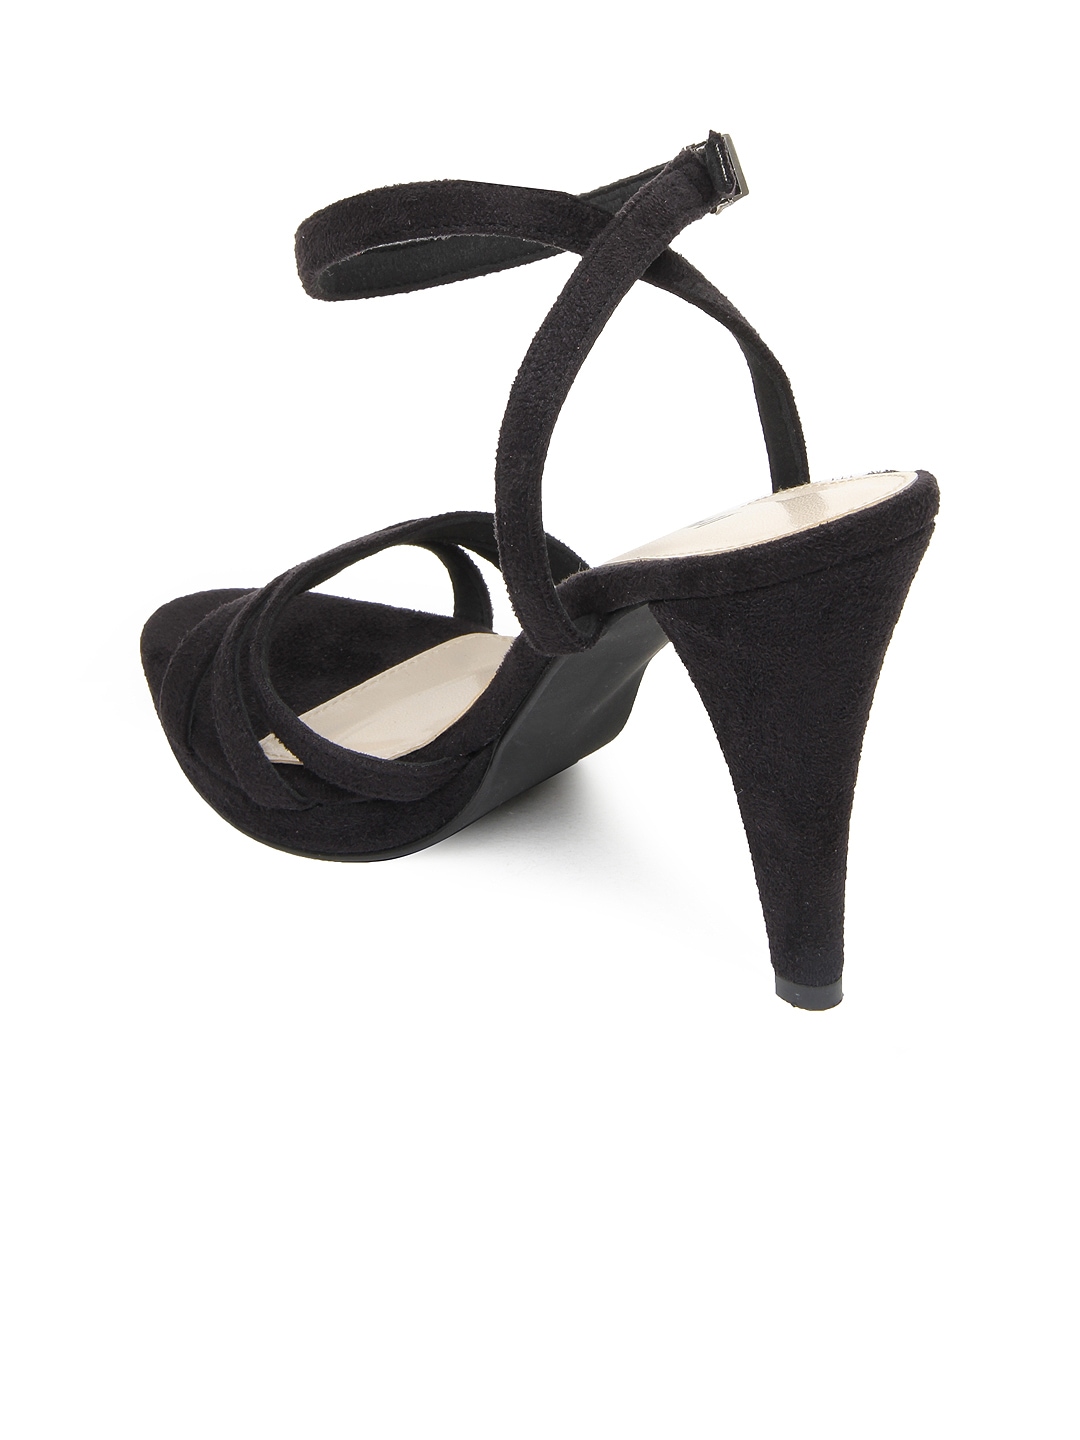 inc 5 black heels